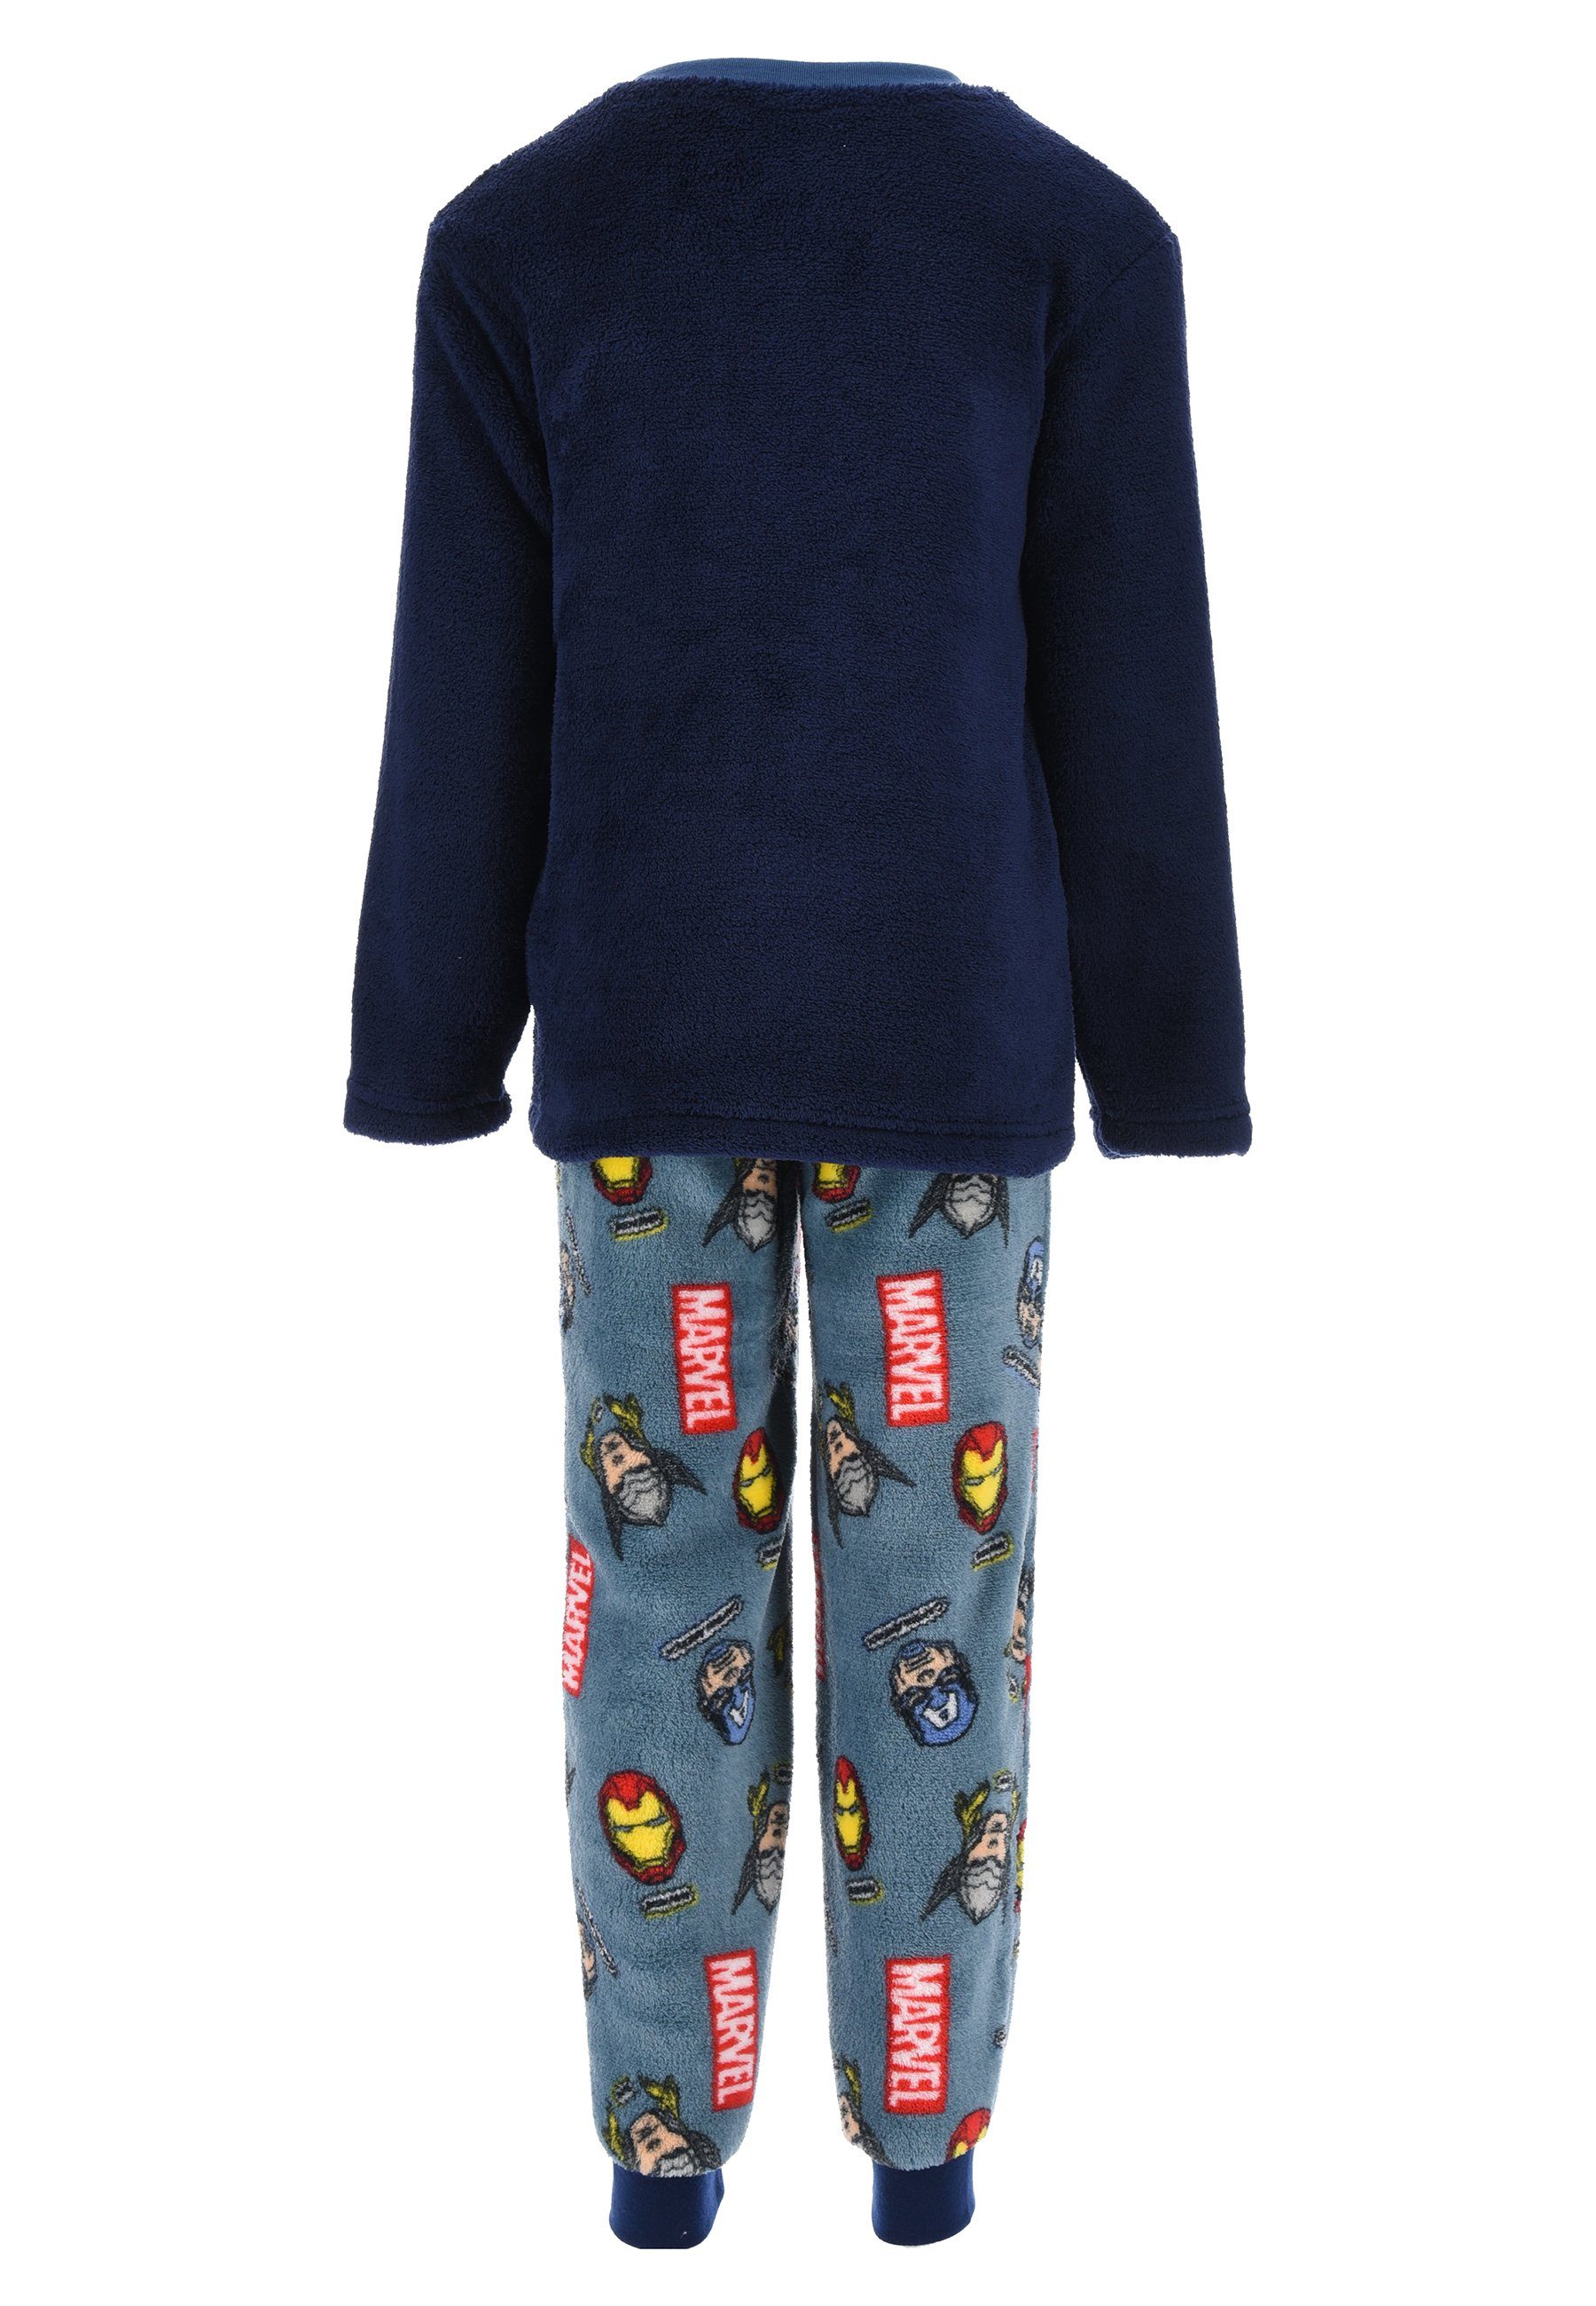 The AVENGERS Schlafanzug Ironman Hulk Kinder Dunkel-Blau Jungen Fleece Pyjama Nachtwäsche Thor